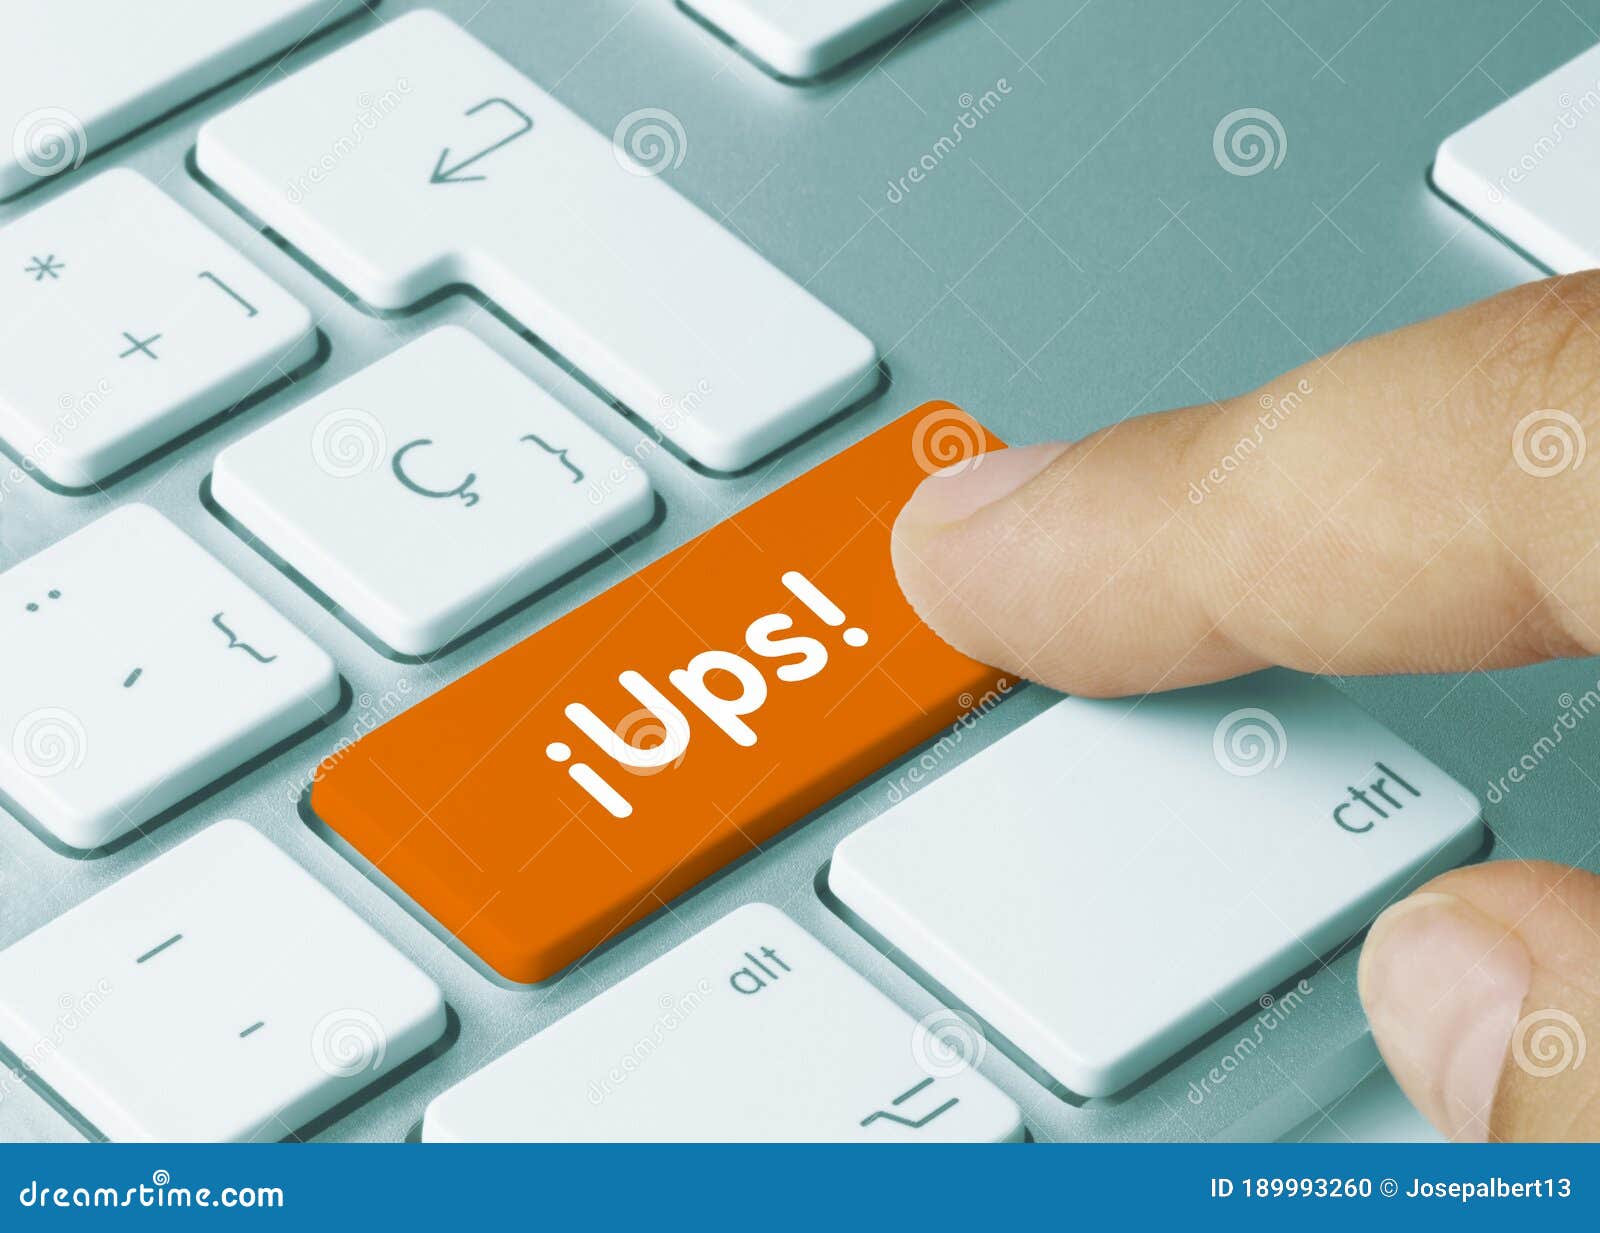 ups! - inscription on orange keyboard key